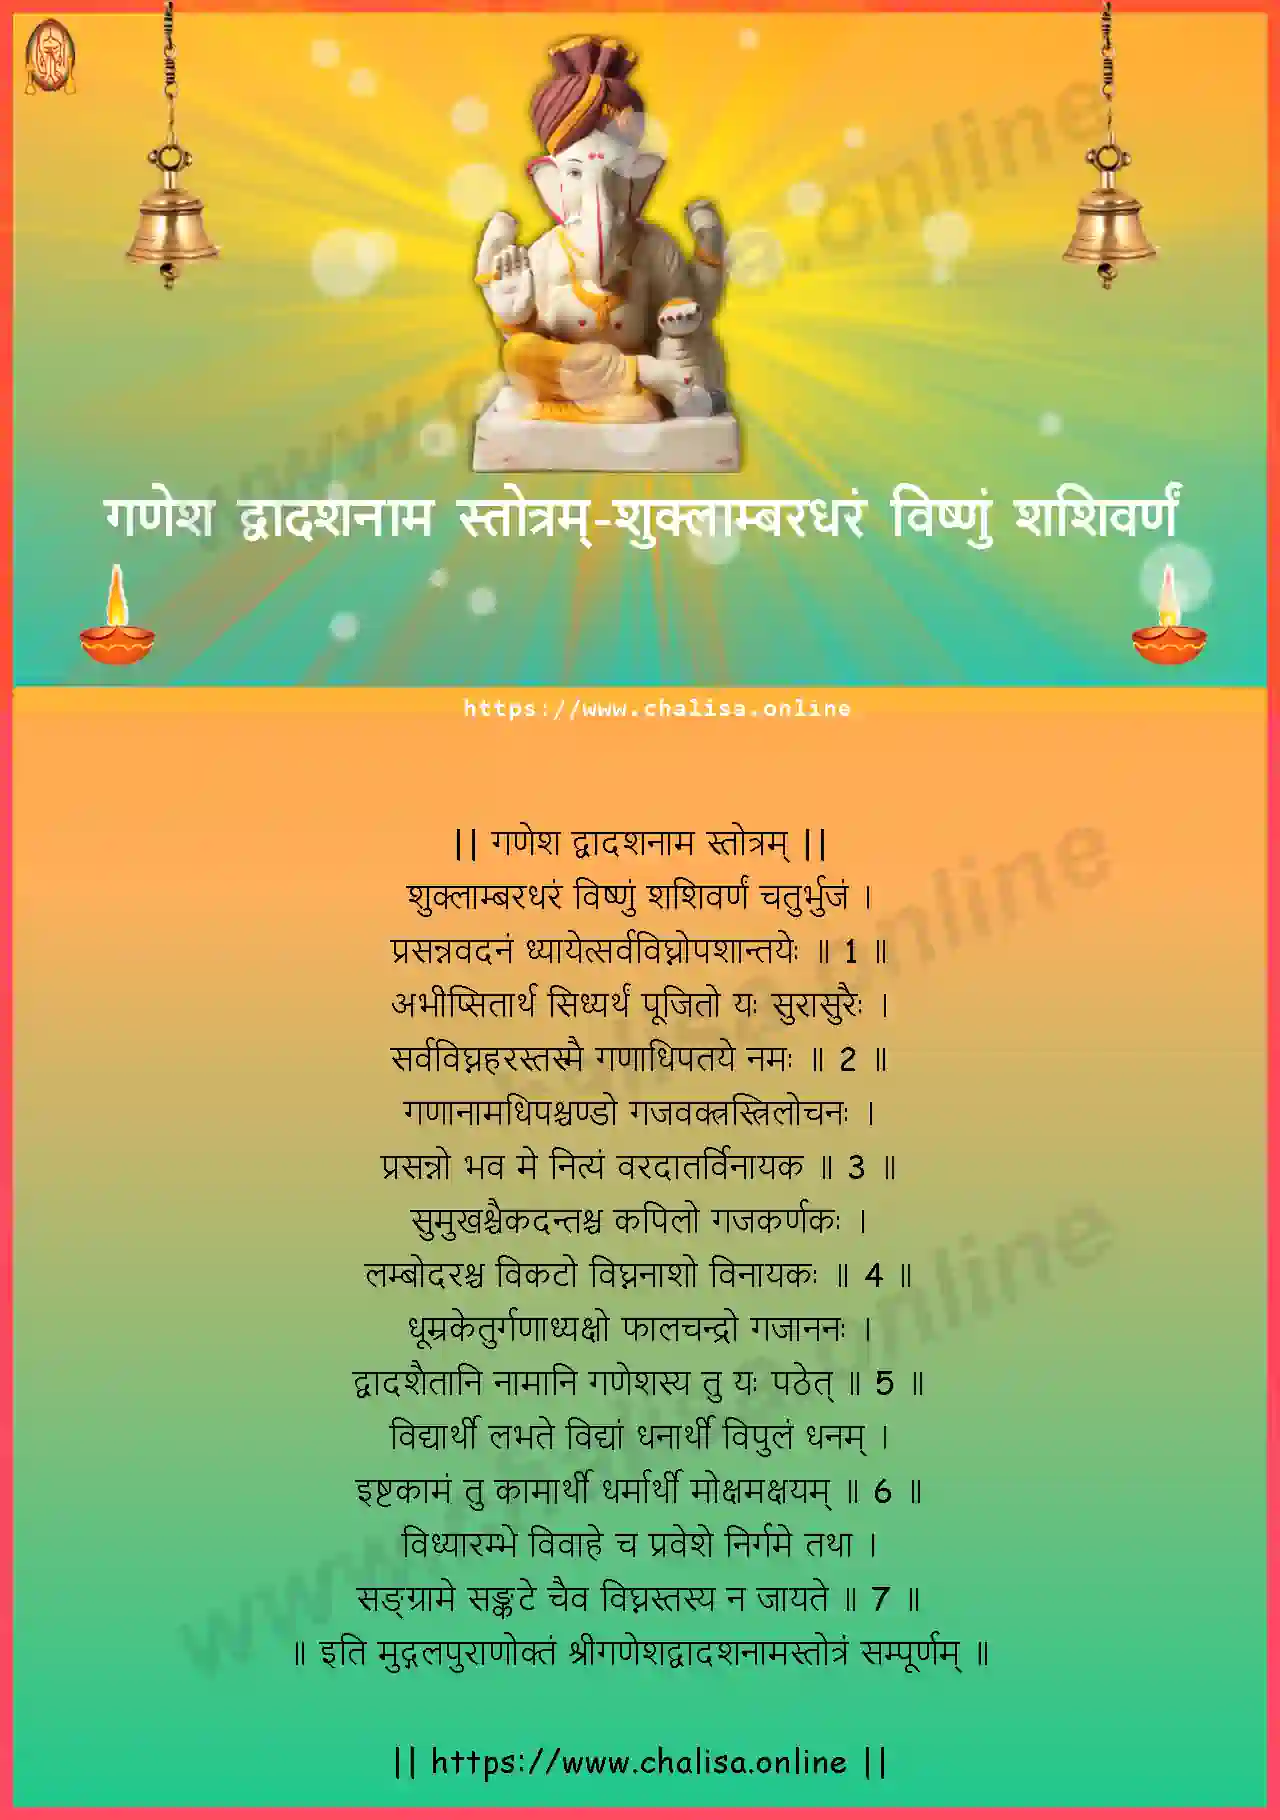 suklambaradharam-ganesha-dwadashanama-stotram-devanagari-devanagari-lyrics-download